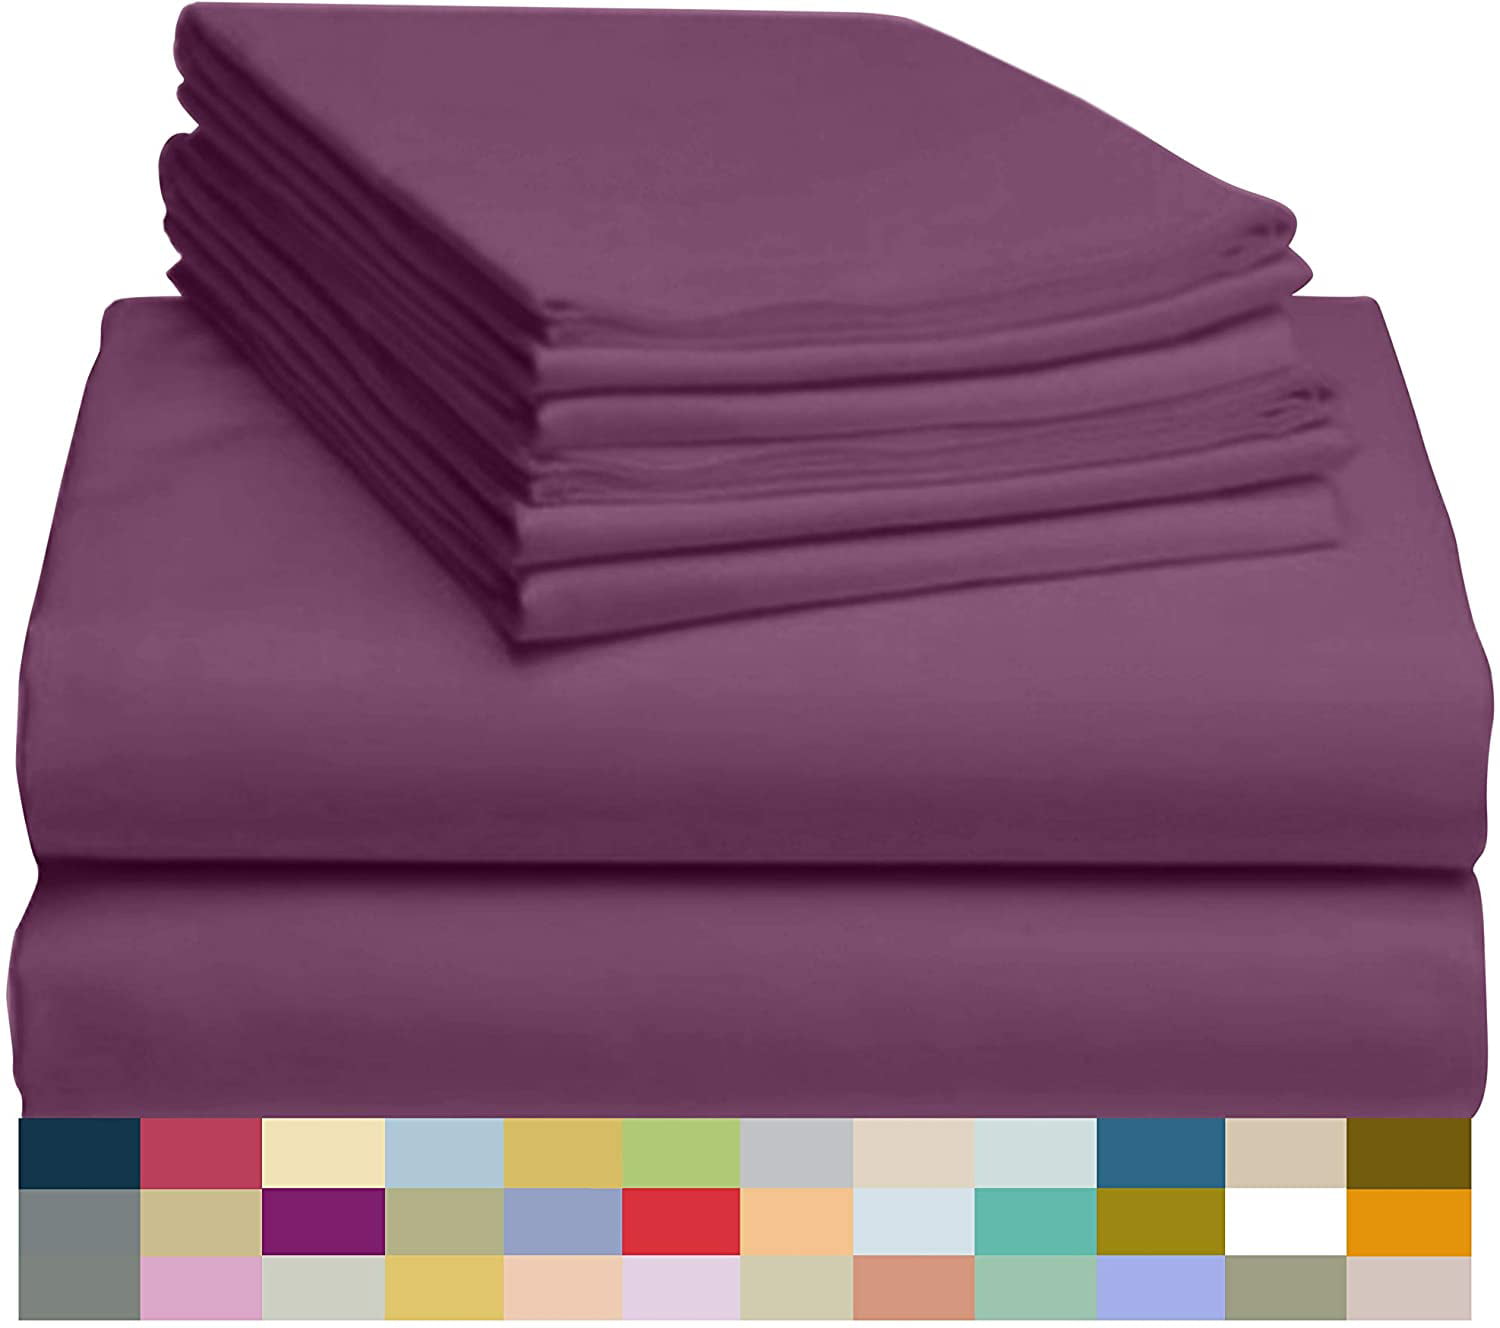 Details about   Extra Deep Pocket 4 PCs Sheet Set 1000 TC Organic Cotton Purple Solid US Size 